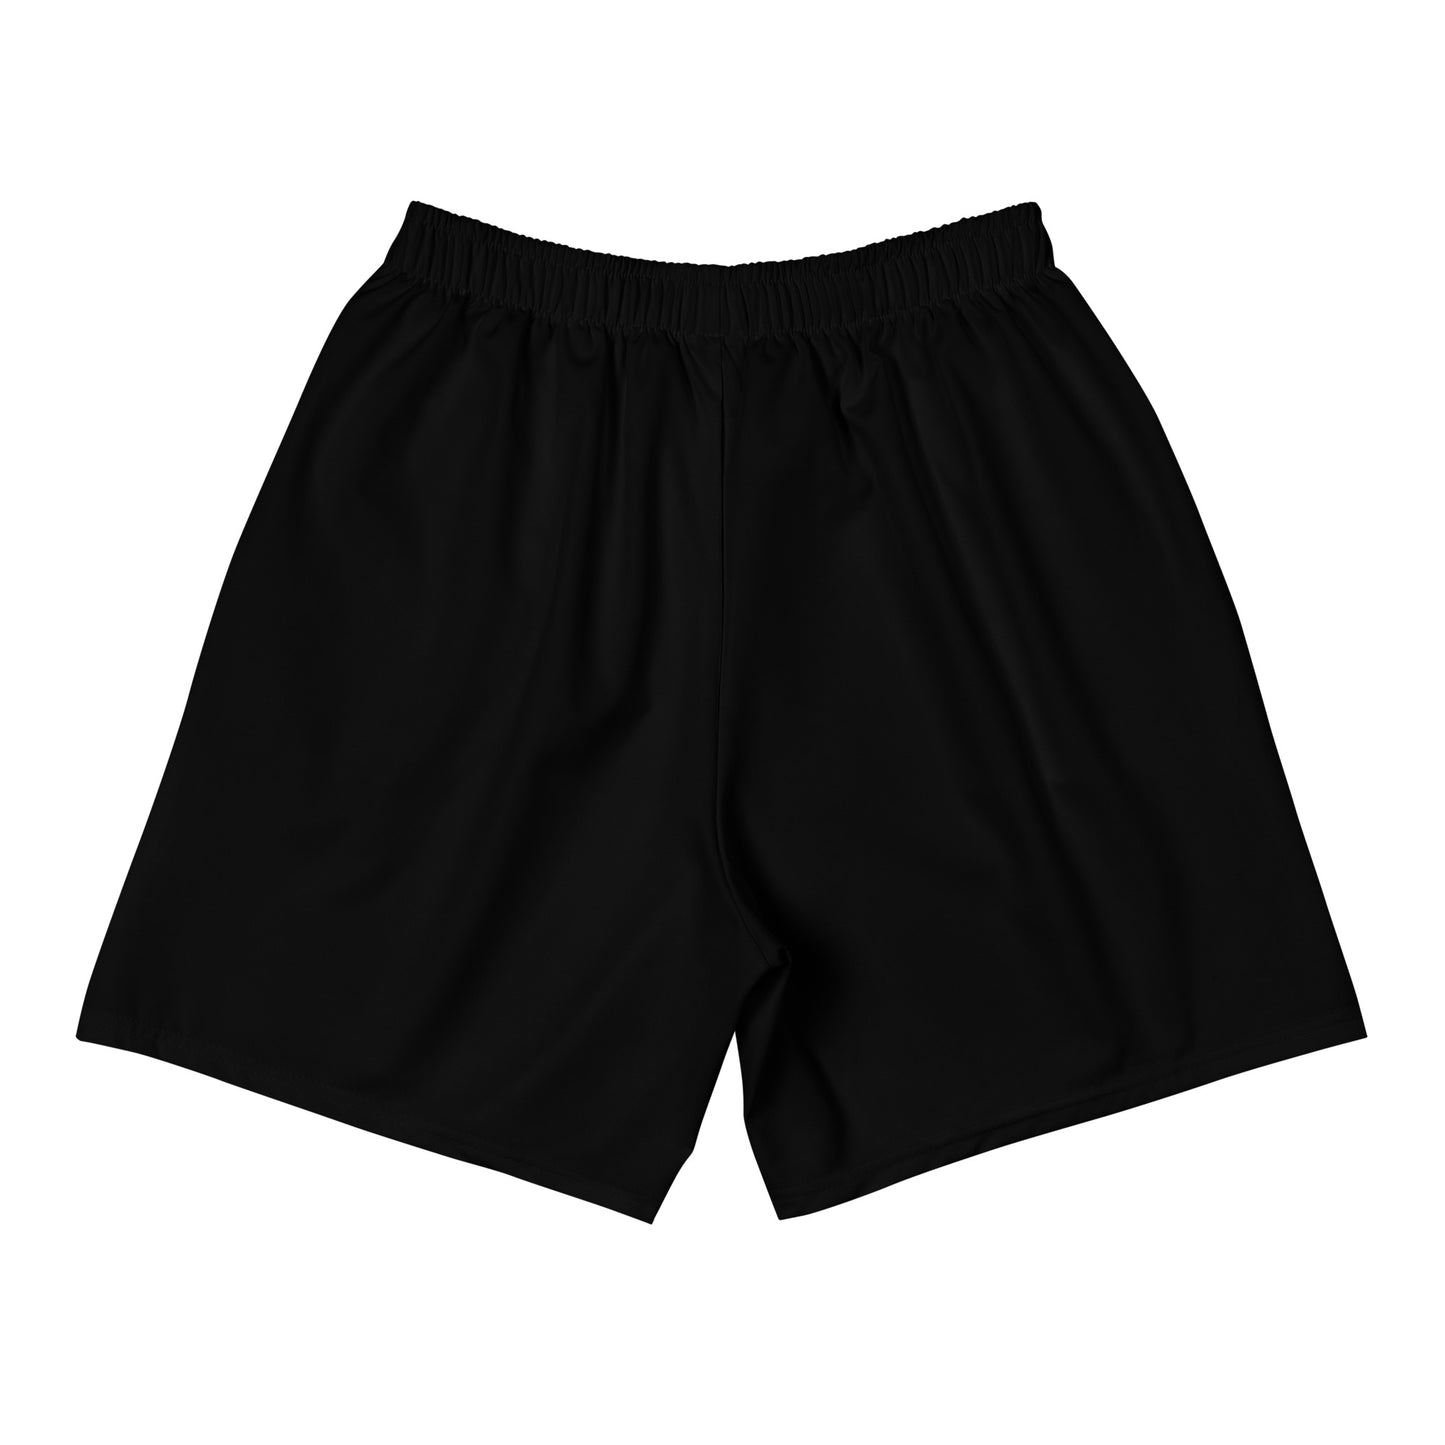 Men's Fitgo Athletic Shorts